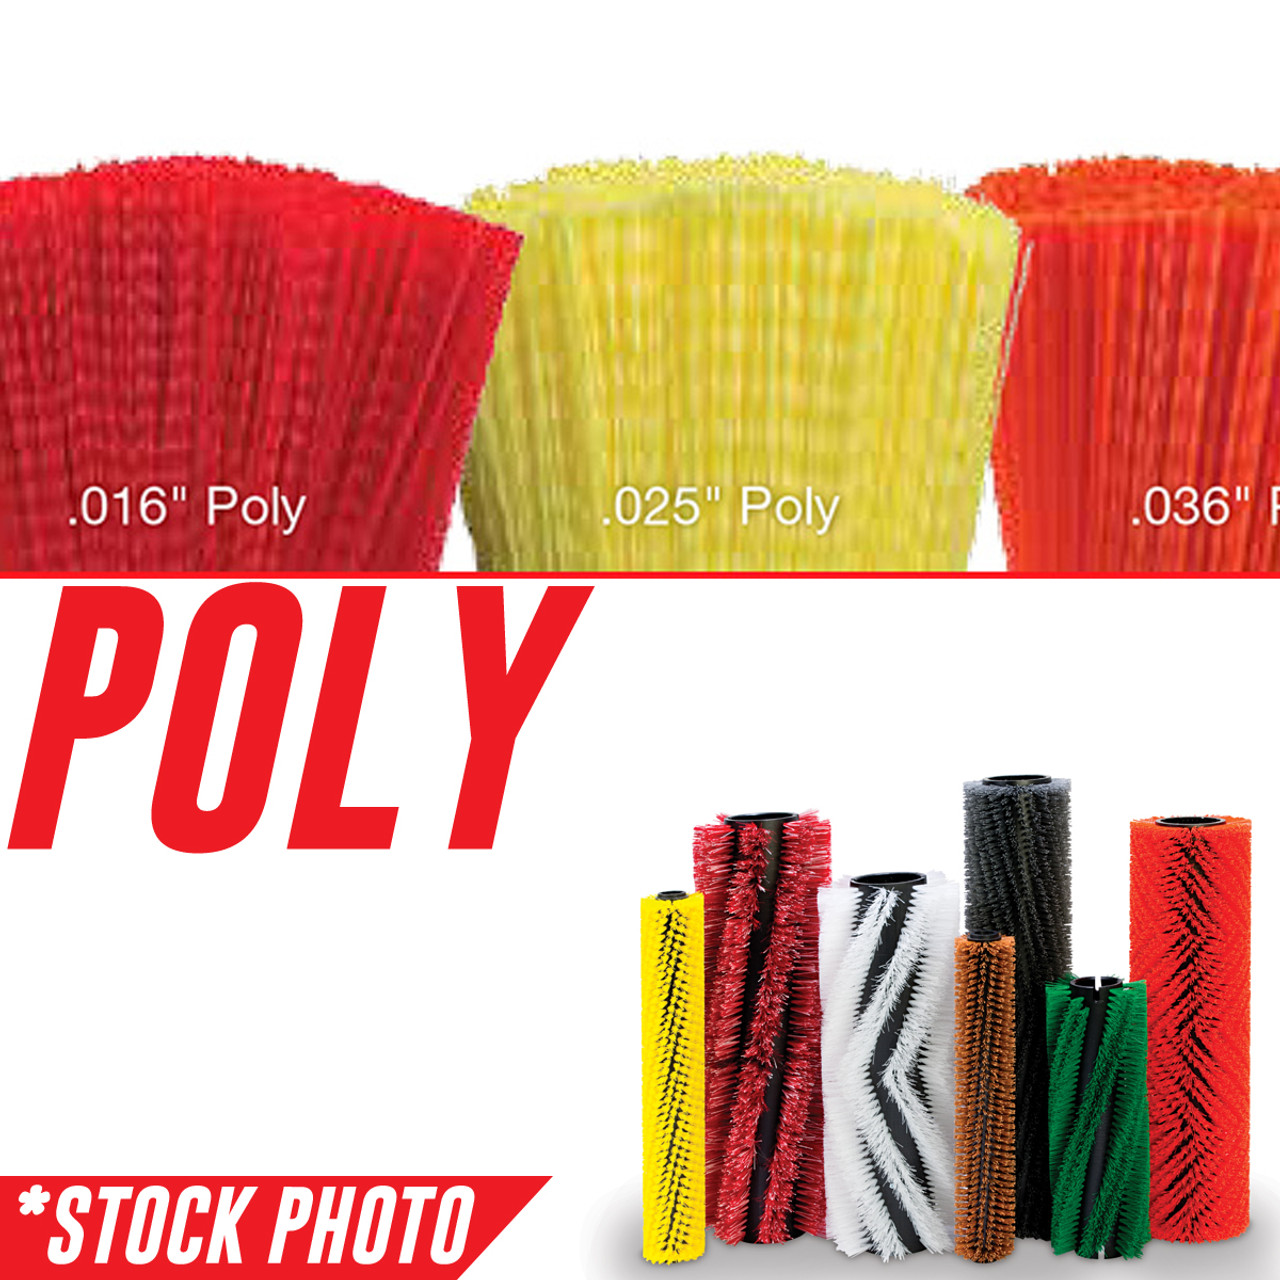 56413118: 40" Cylindrical Brush 18 Single Row Poly fits Advance-Nilfisk Models Condor 4030, SC6500 40